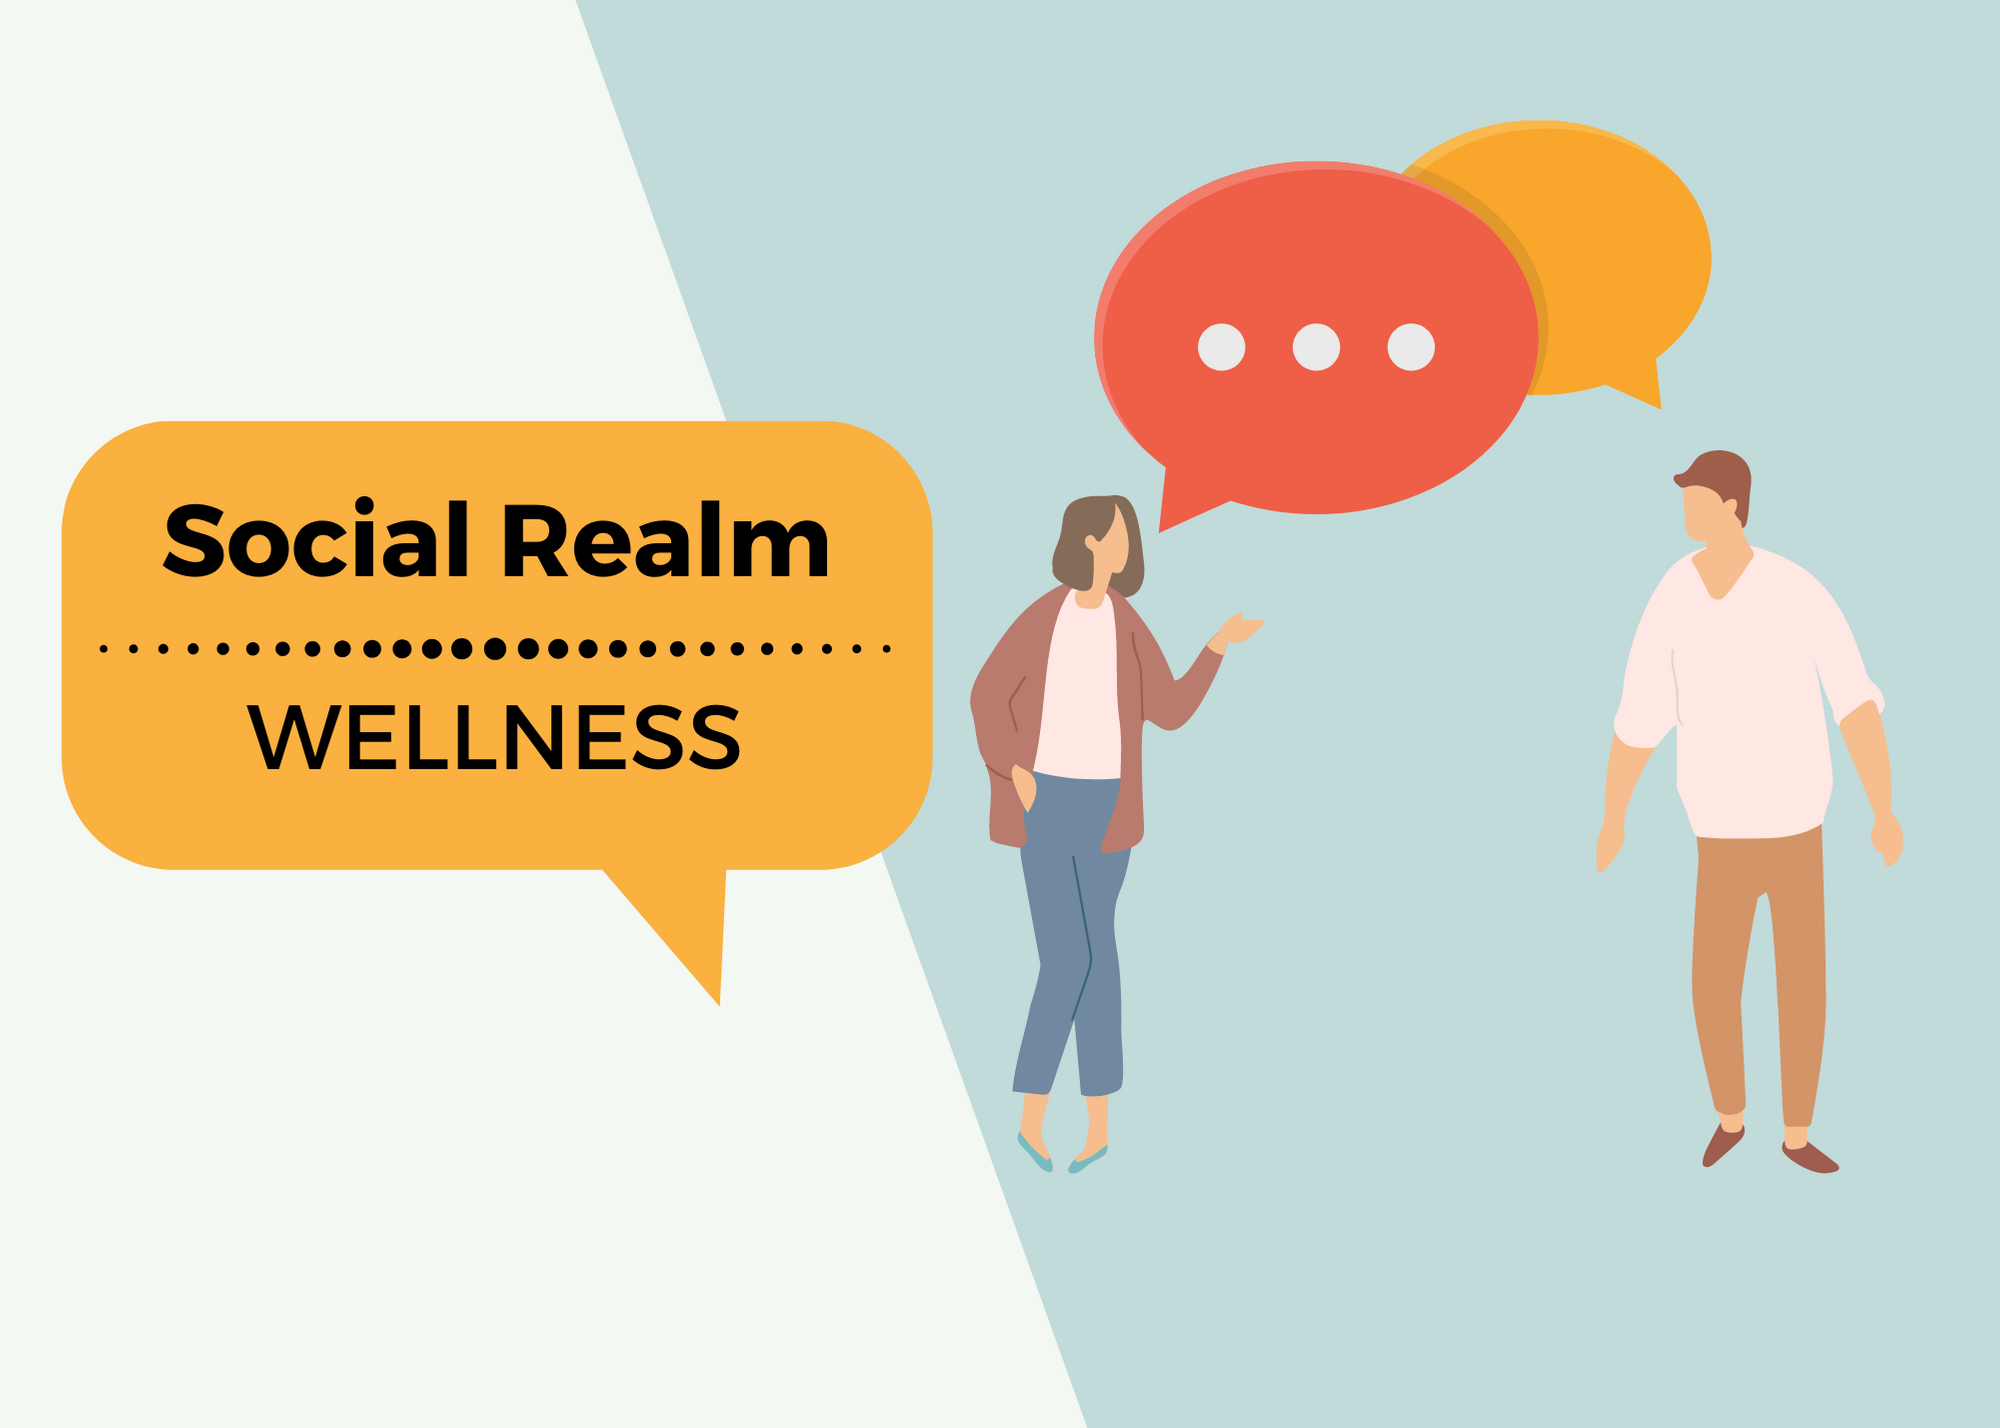 The Social Realm & Wellness